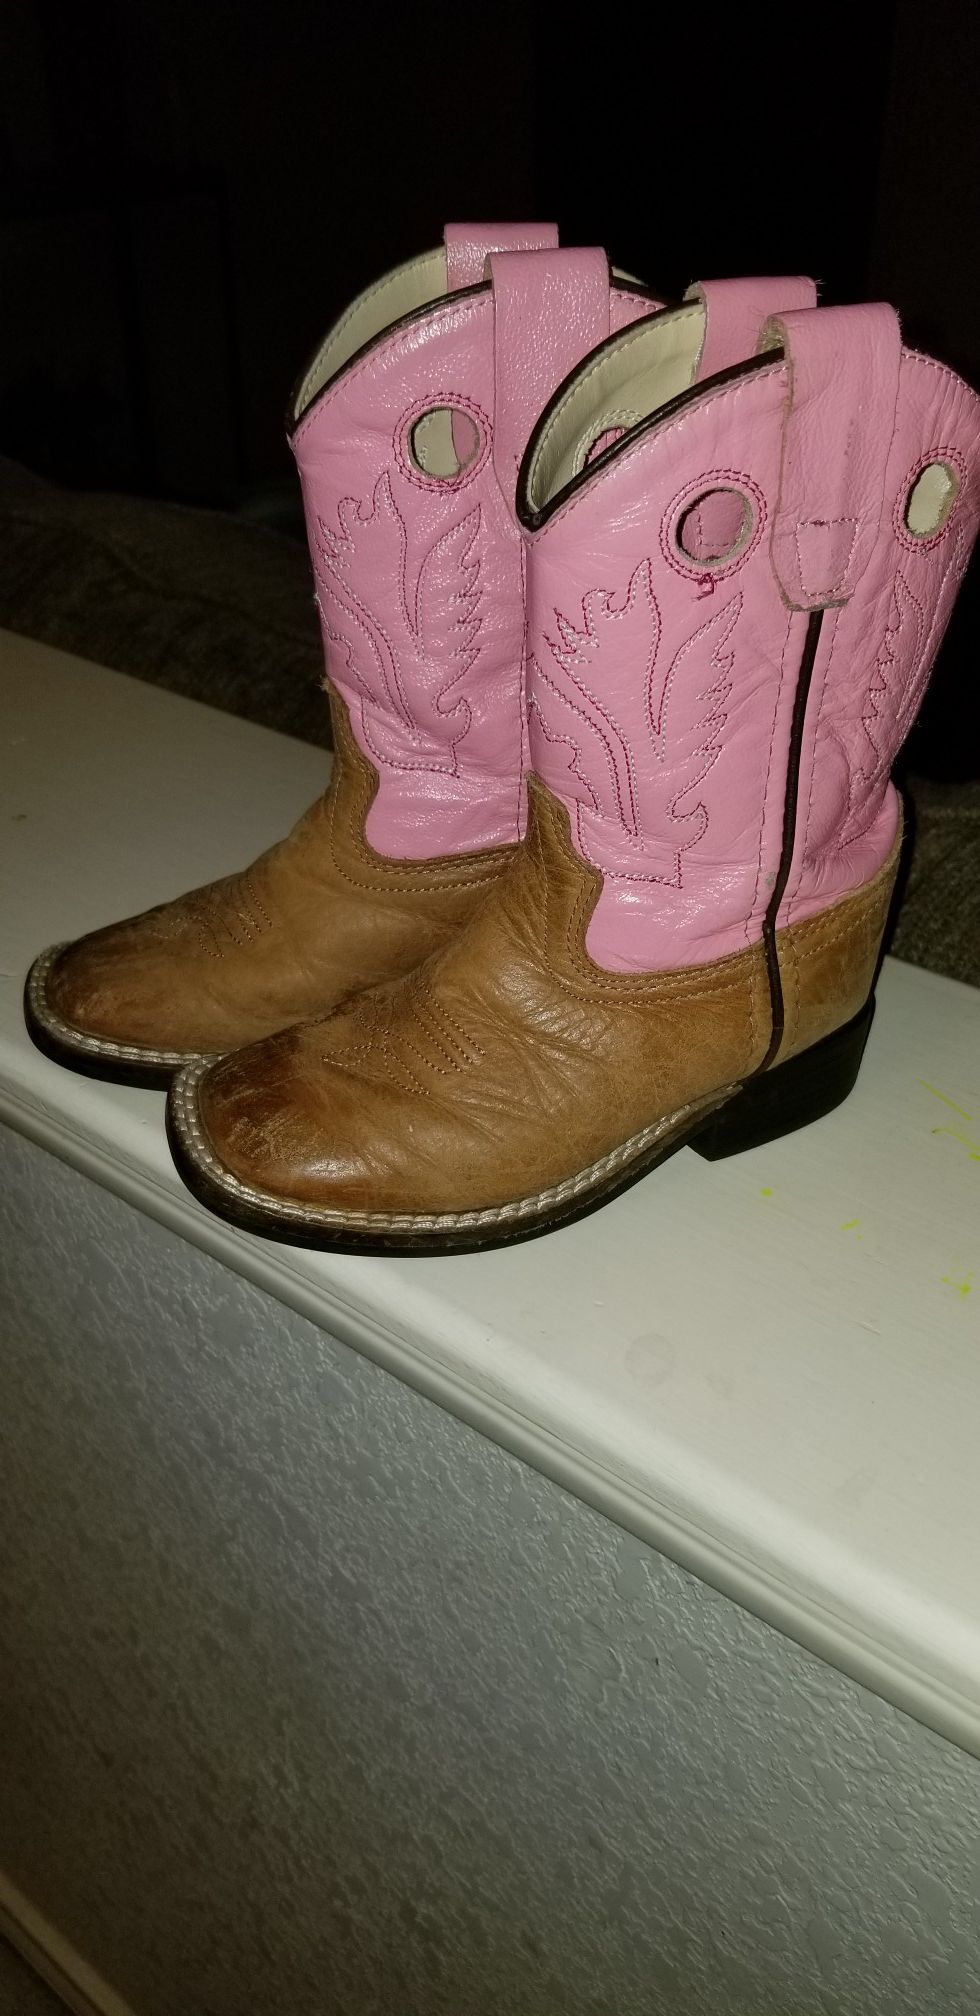 Toddler cowboy boots